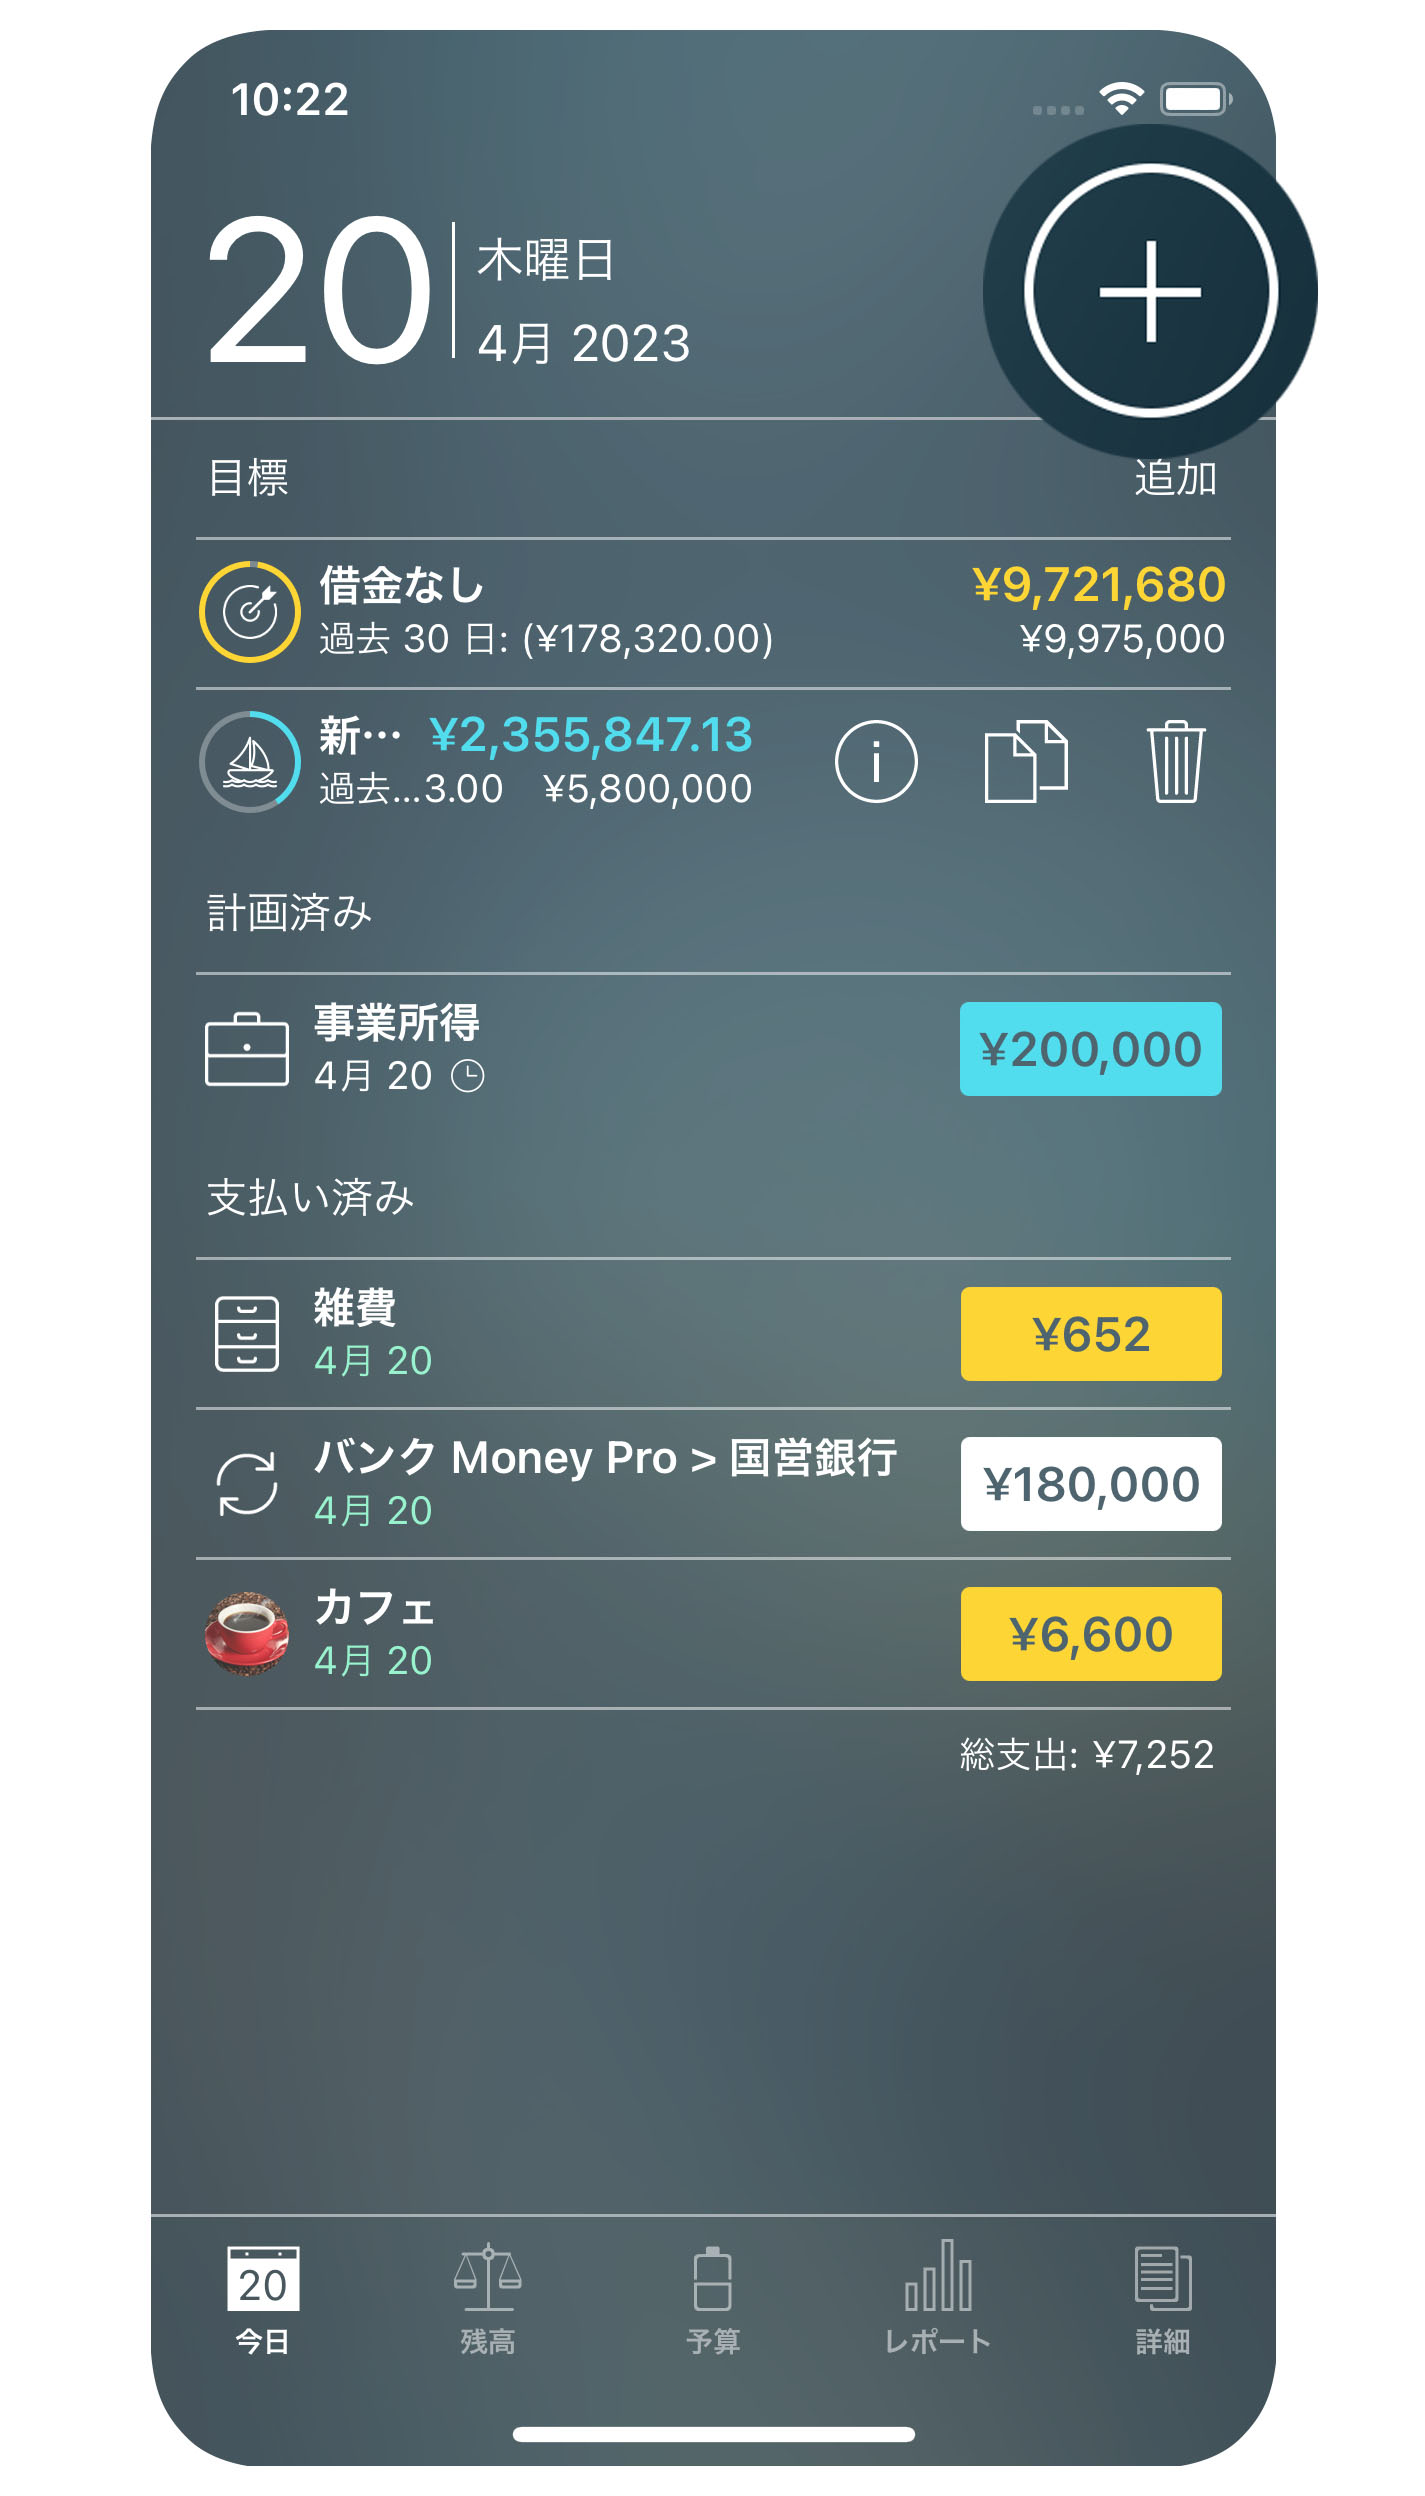 Money Pro - 取引の作成 - iPhone